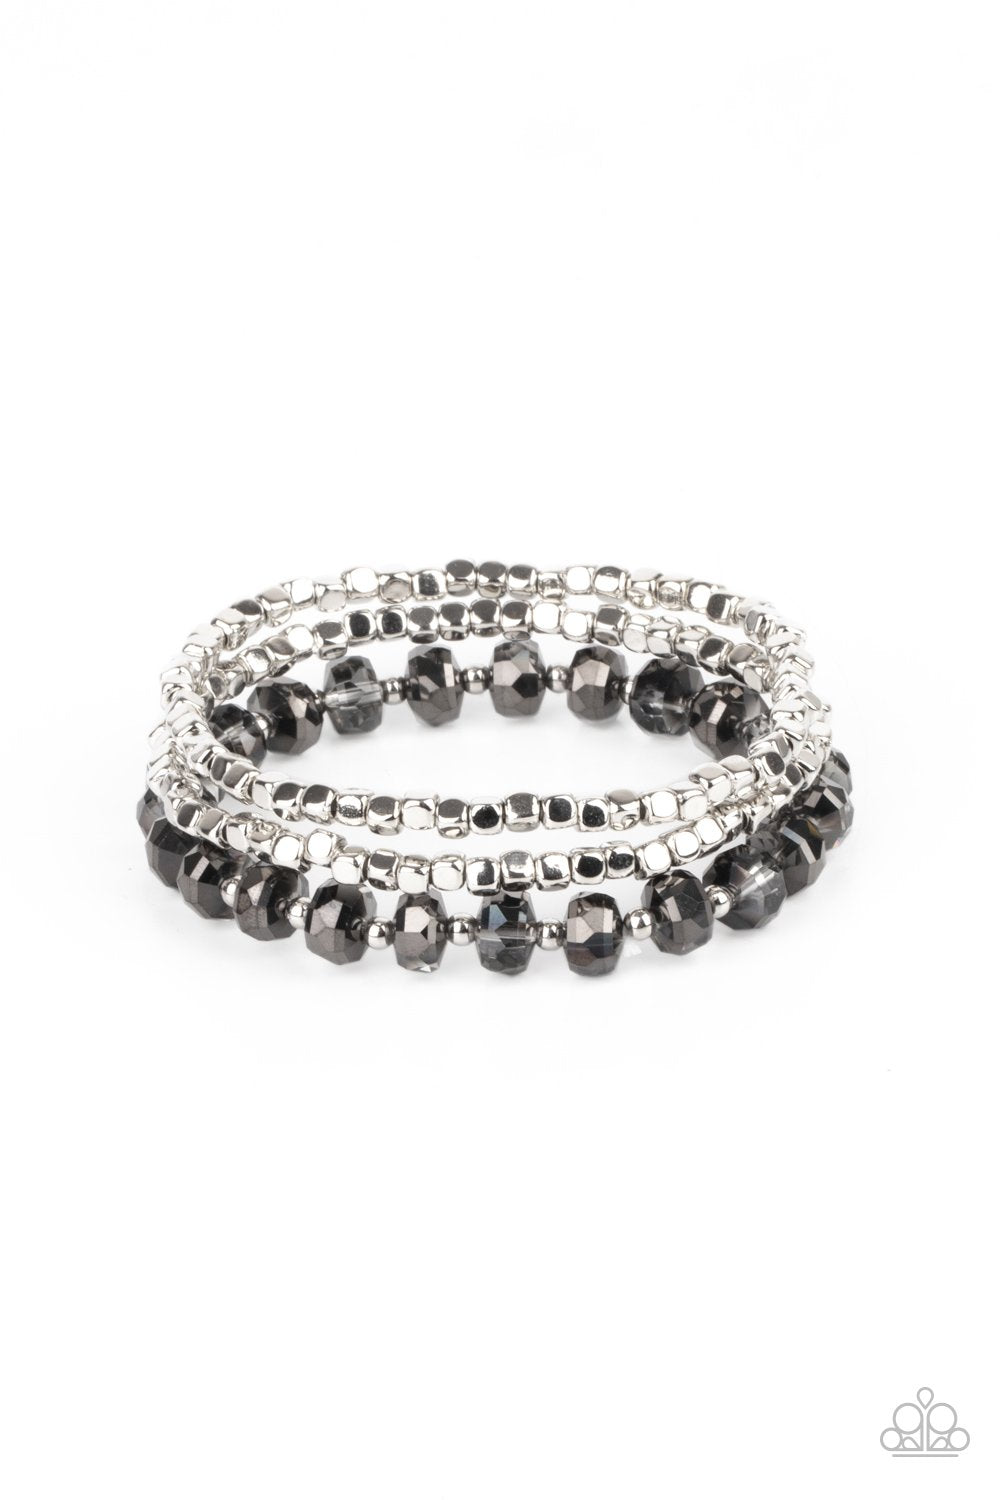 Celestial Circus - Silver and Hematite Beads Bracelet freeshipping - JewLz4u Gemstone Gallery